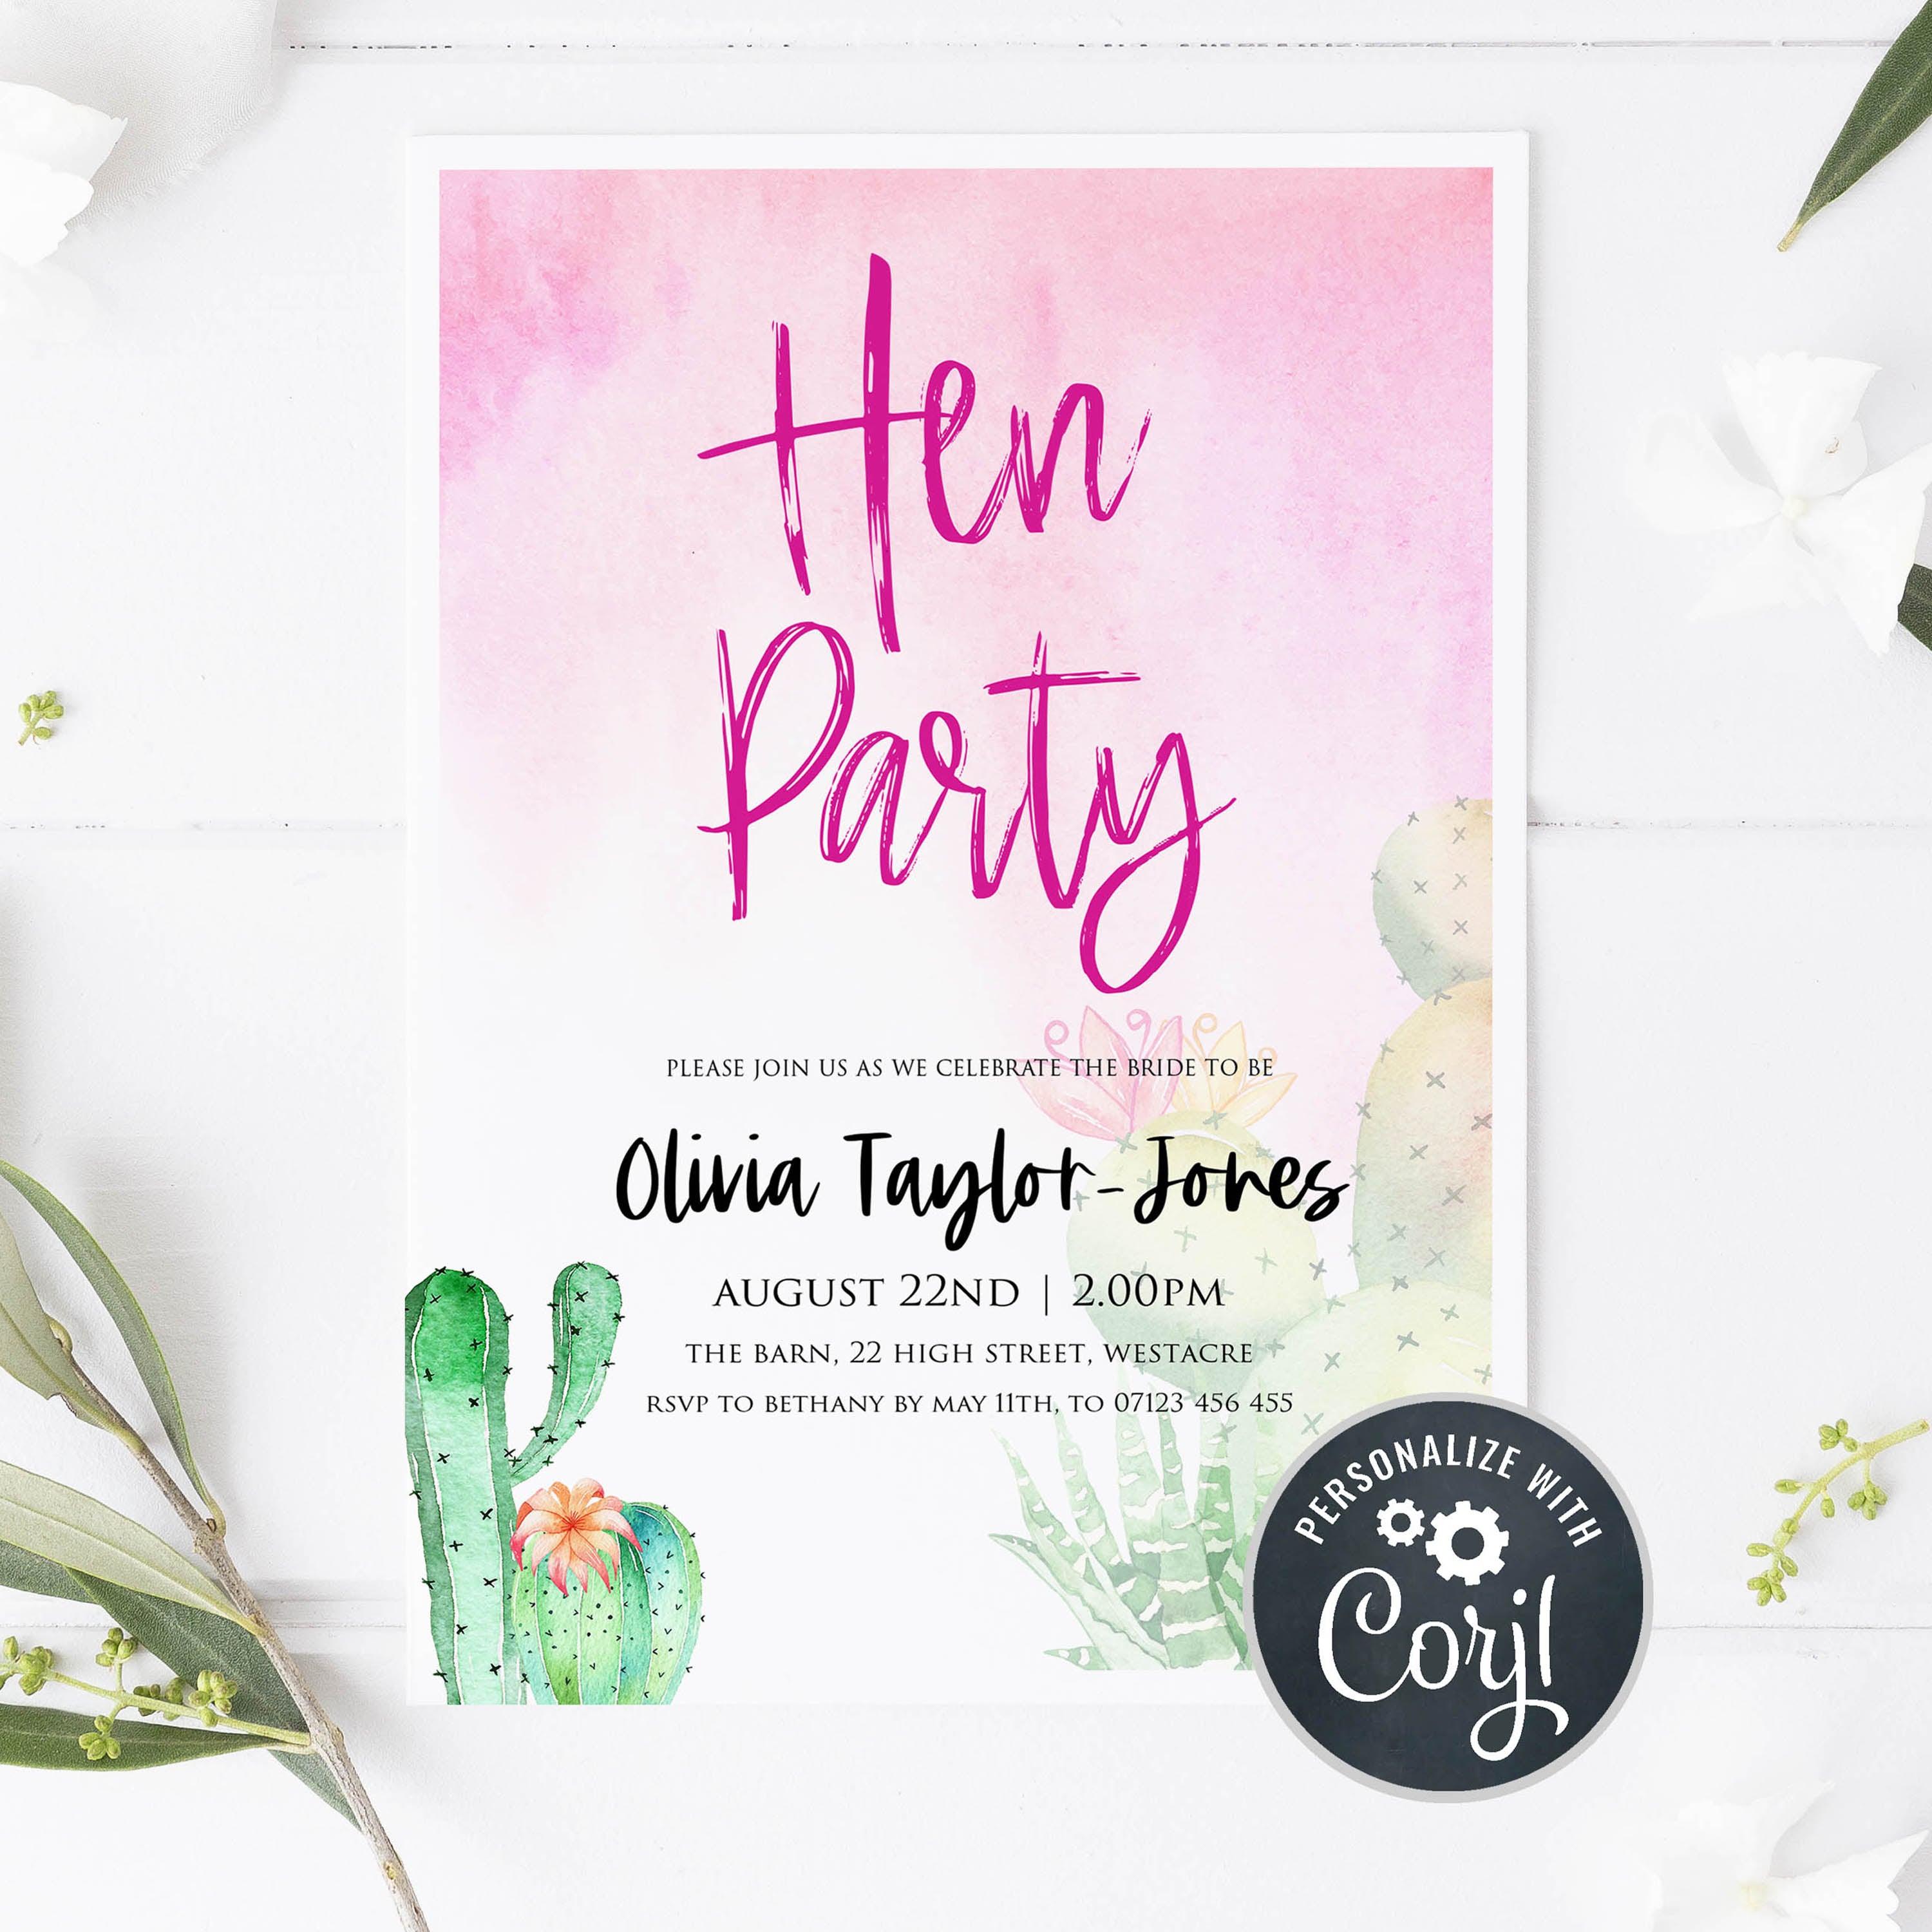 editable hen party invitations, editable final fiesta bridal shower invitations, hen party invites, editable hen party invitations, bridal invites